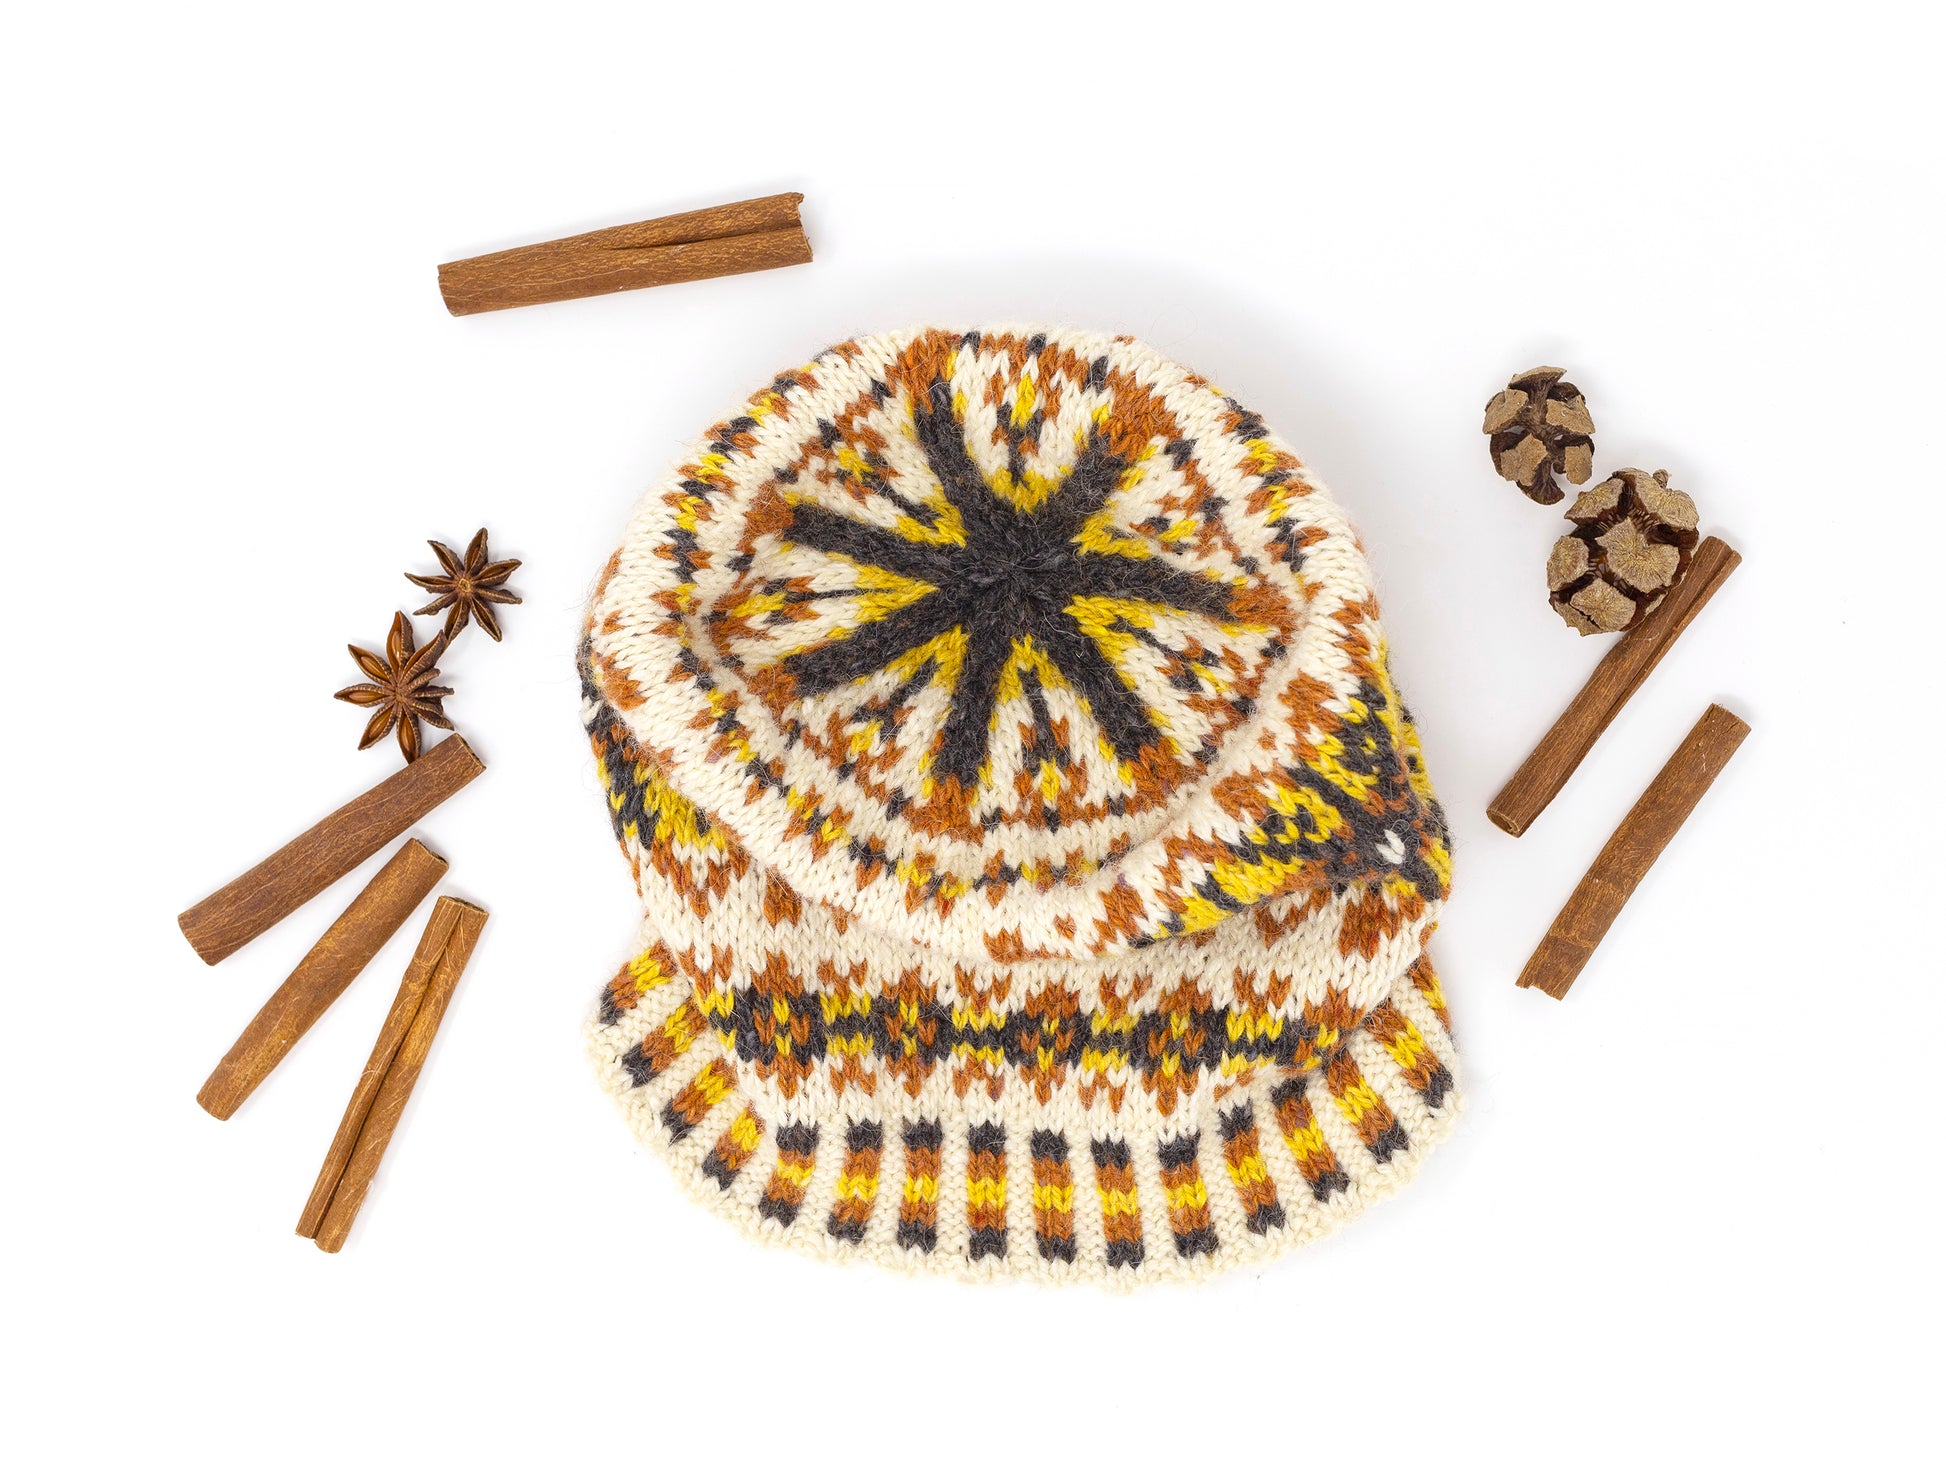 yellow, orange, black and white wool hand-knitted Fair Isle beanie hat top view